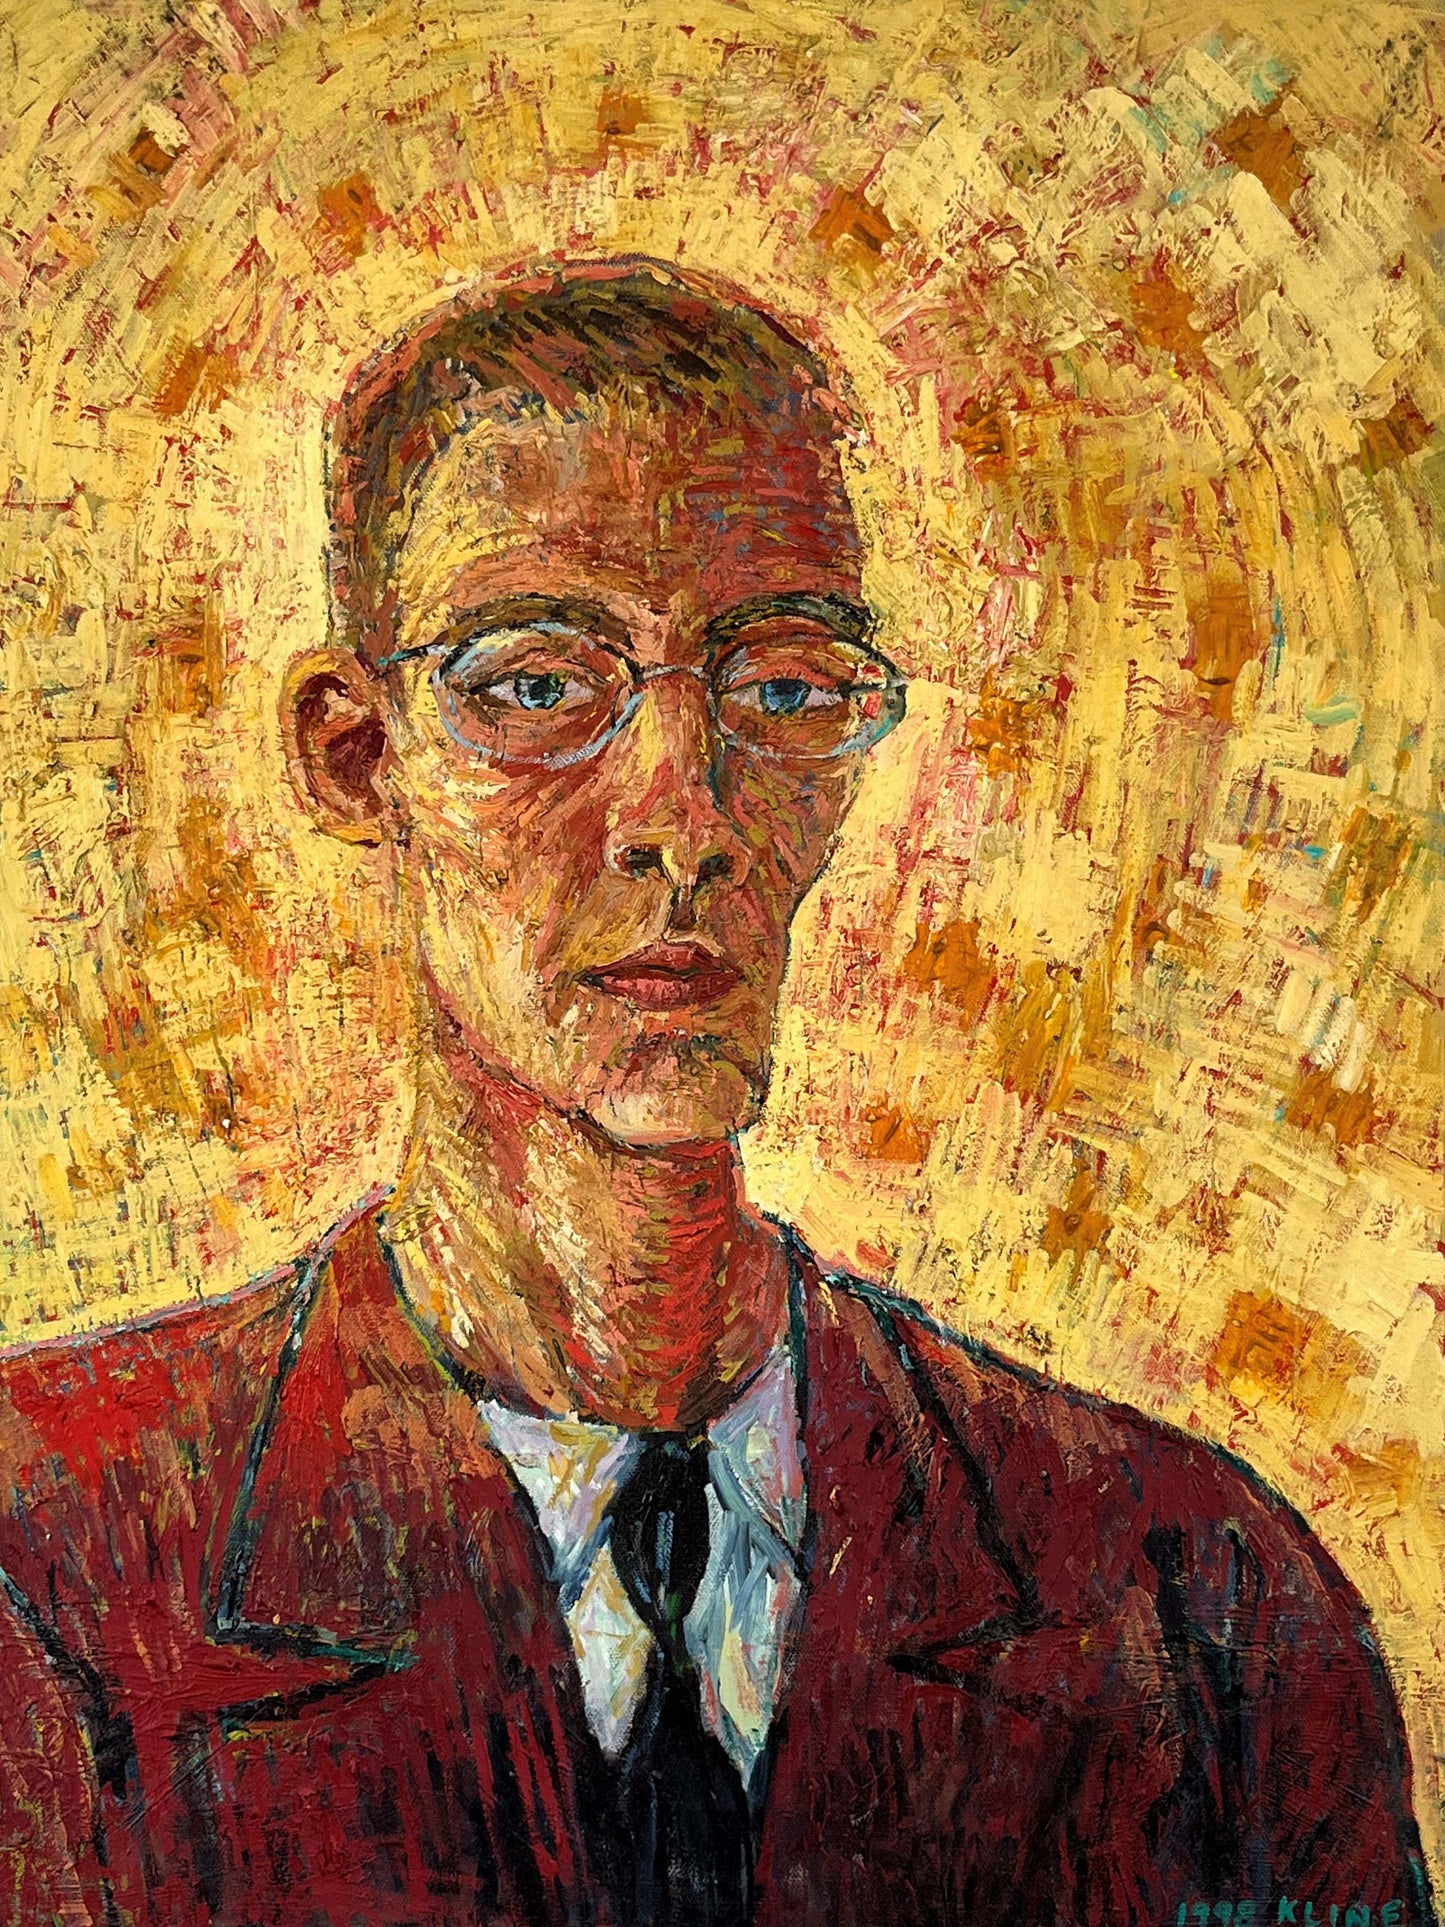 Self-Portrait, 1998. Oil on Canvas. 18" x 24". John Kline Artwork. Yellow Red van Gogh style